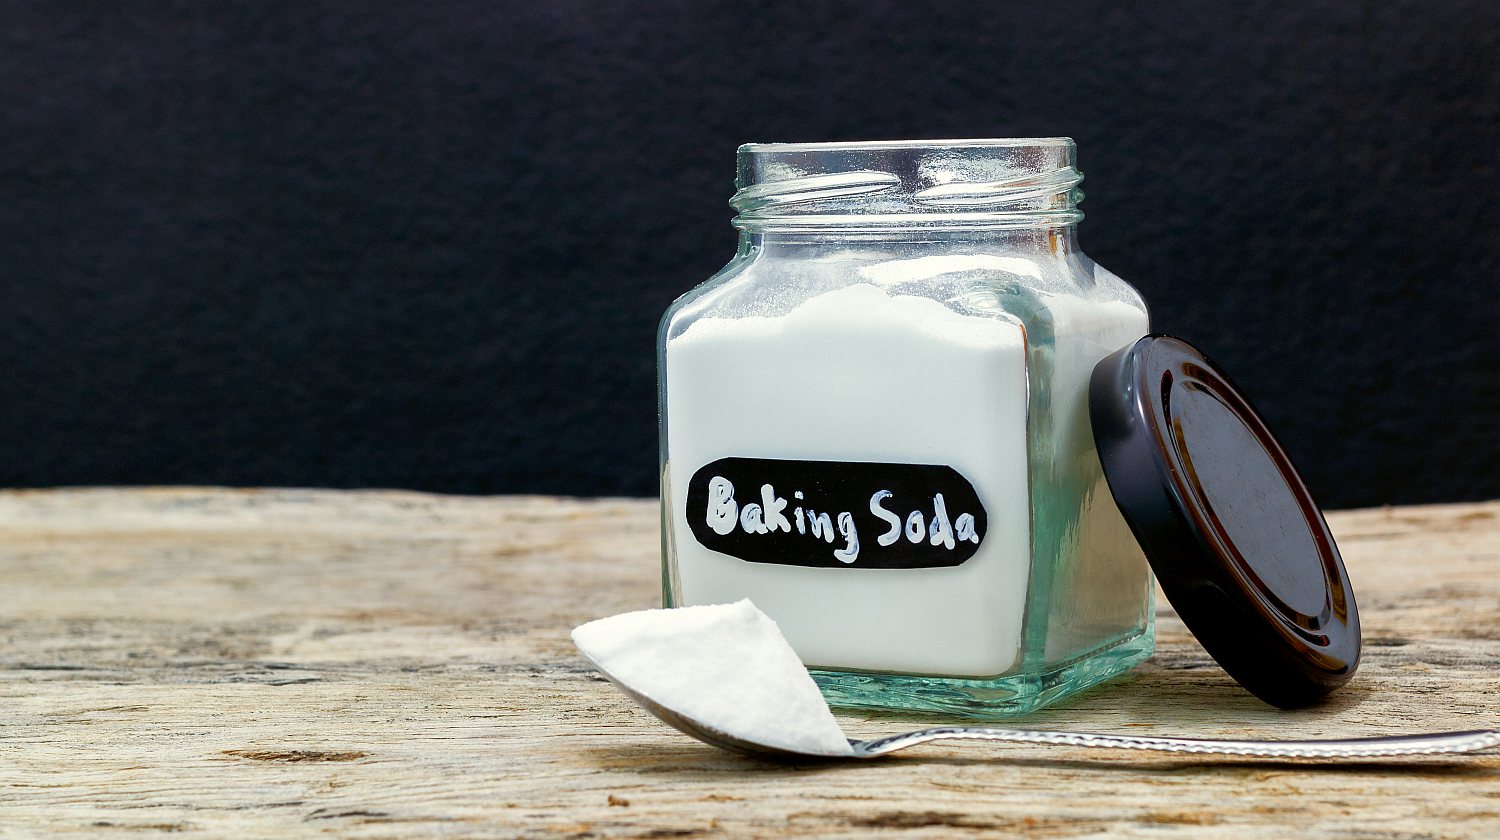 Feature | Baking soda in a jar | Surprising Benefits of Baking Soda